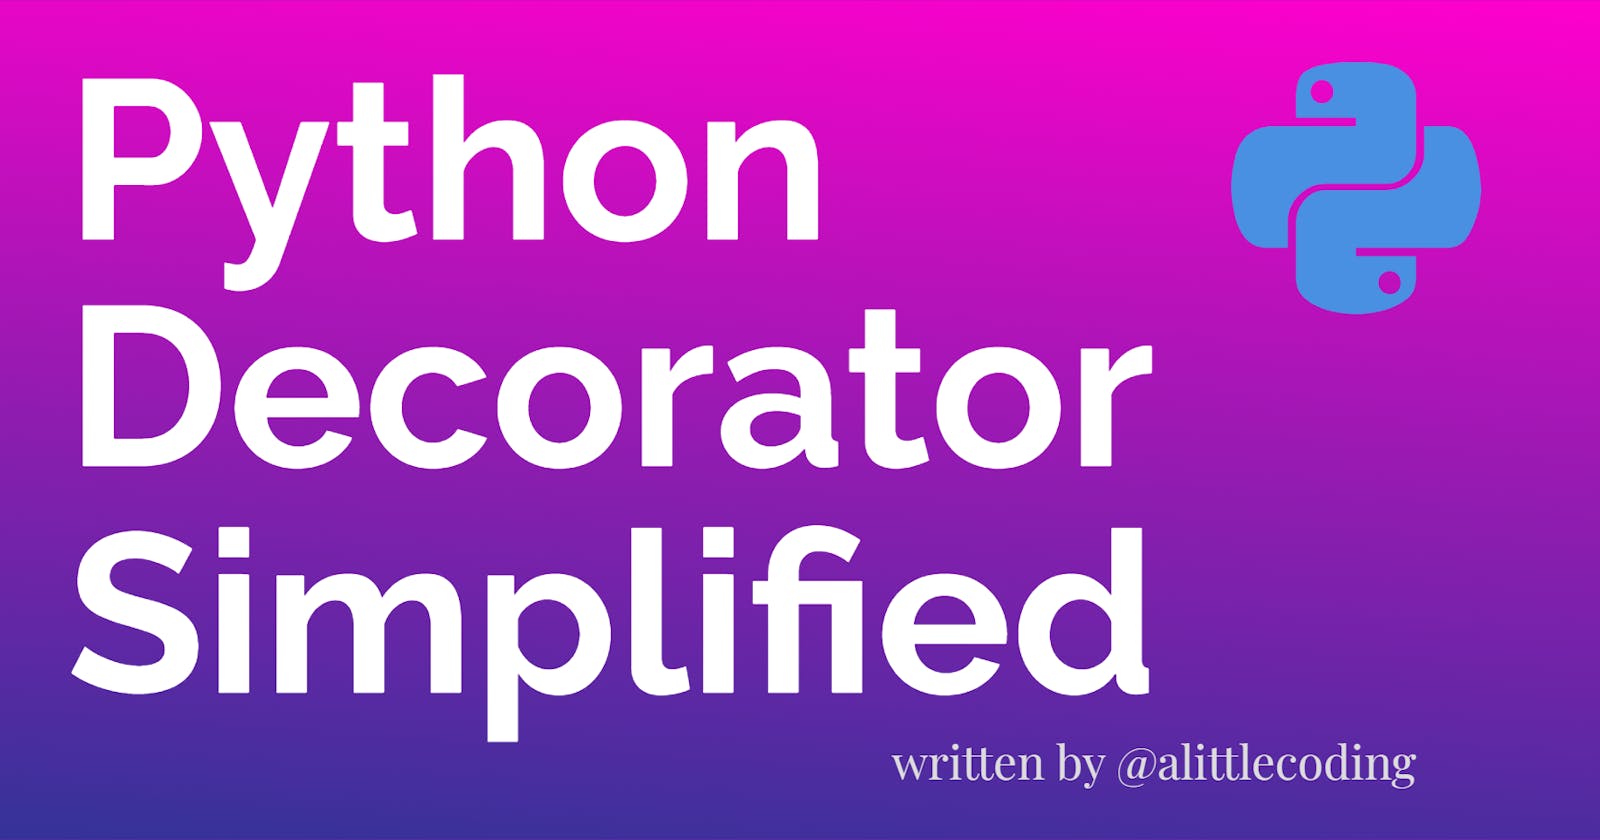 Python decorators simplified